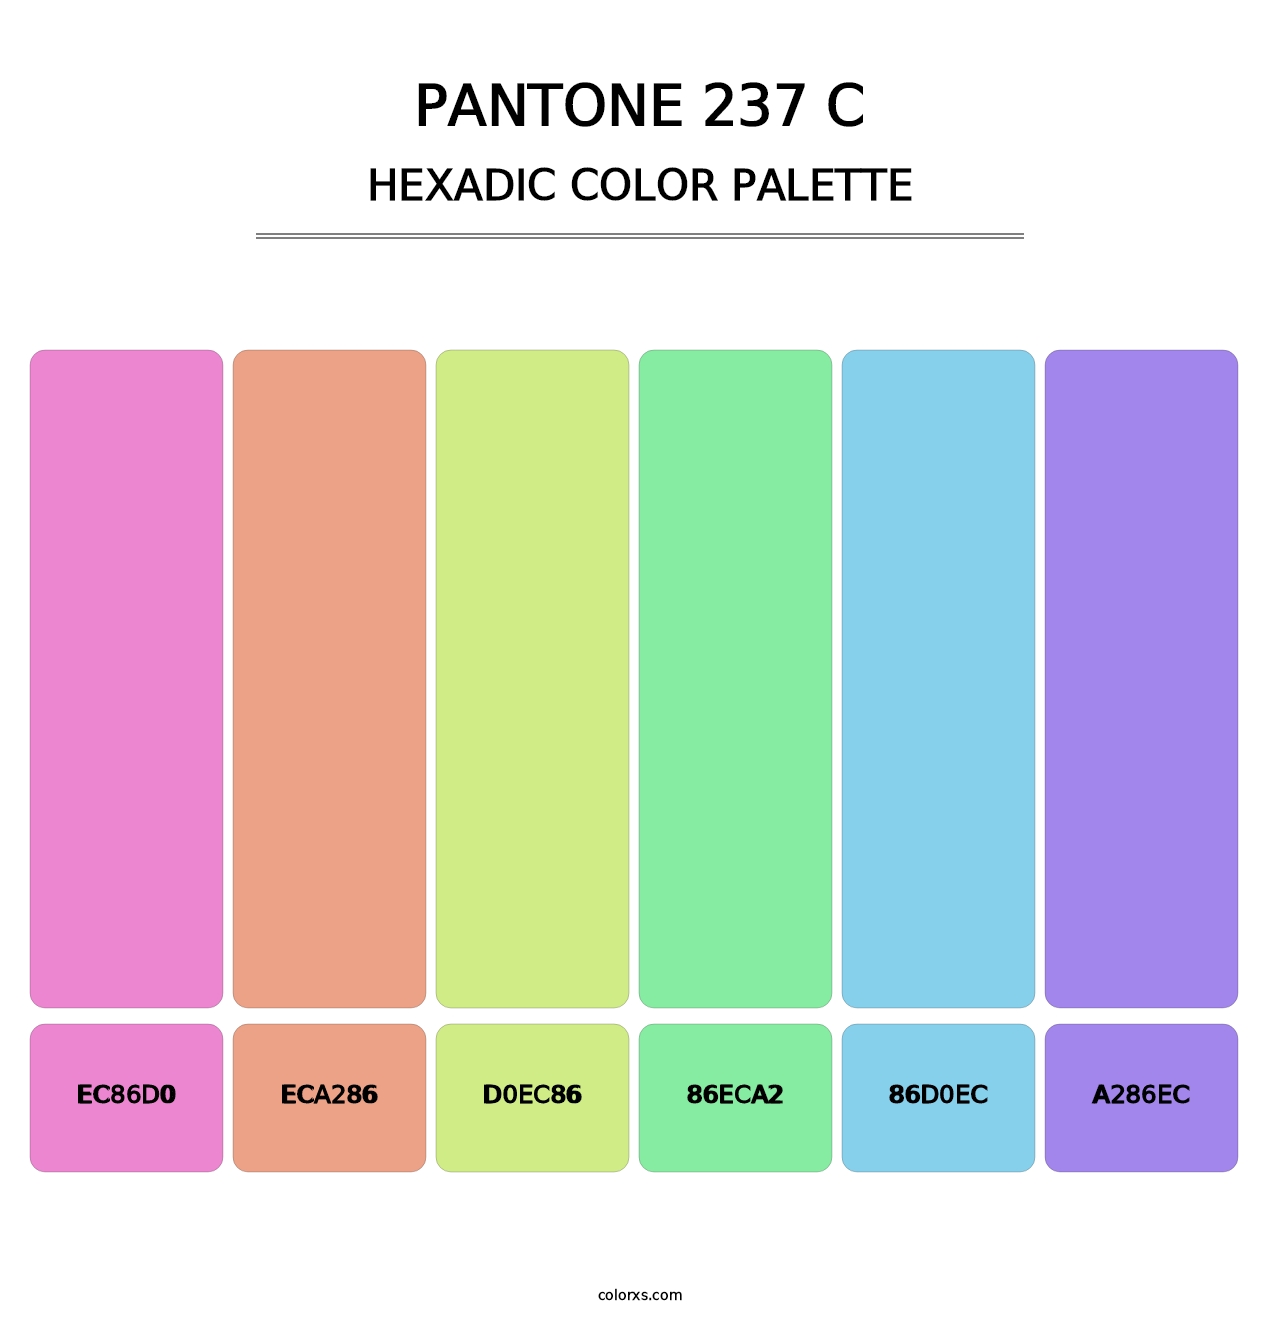 PANTONE 237 C - Hexadic Color Palette